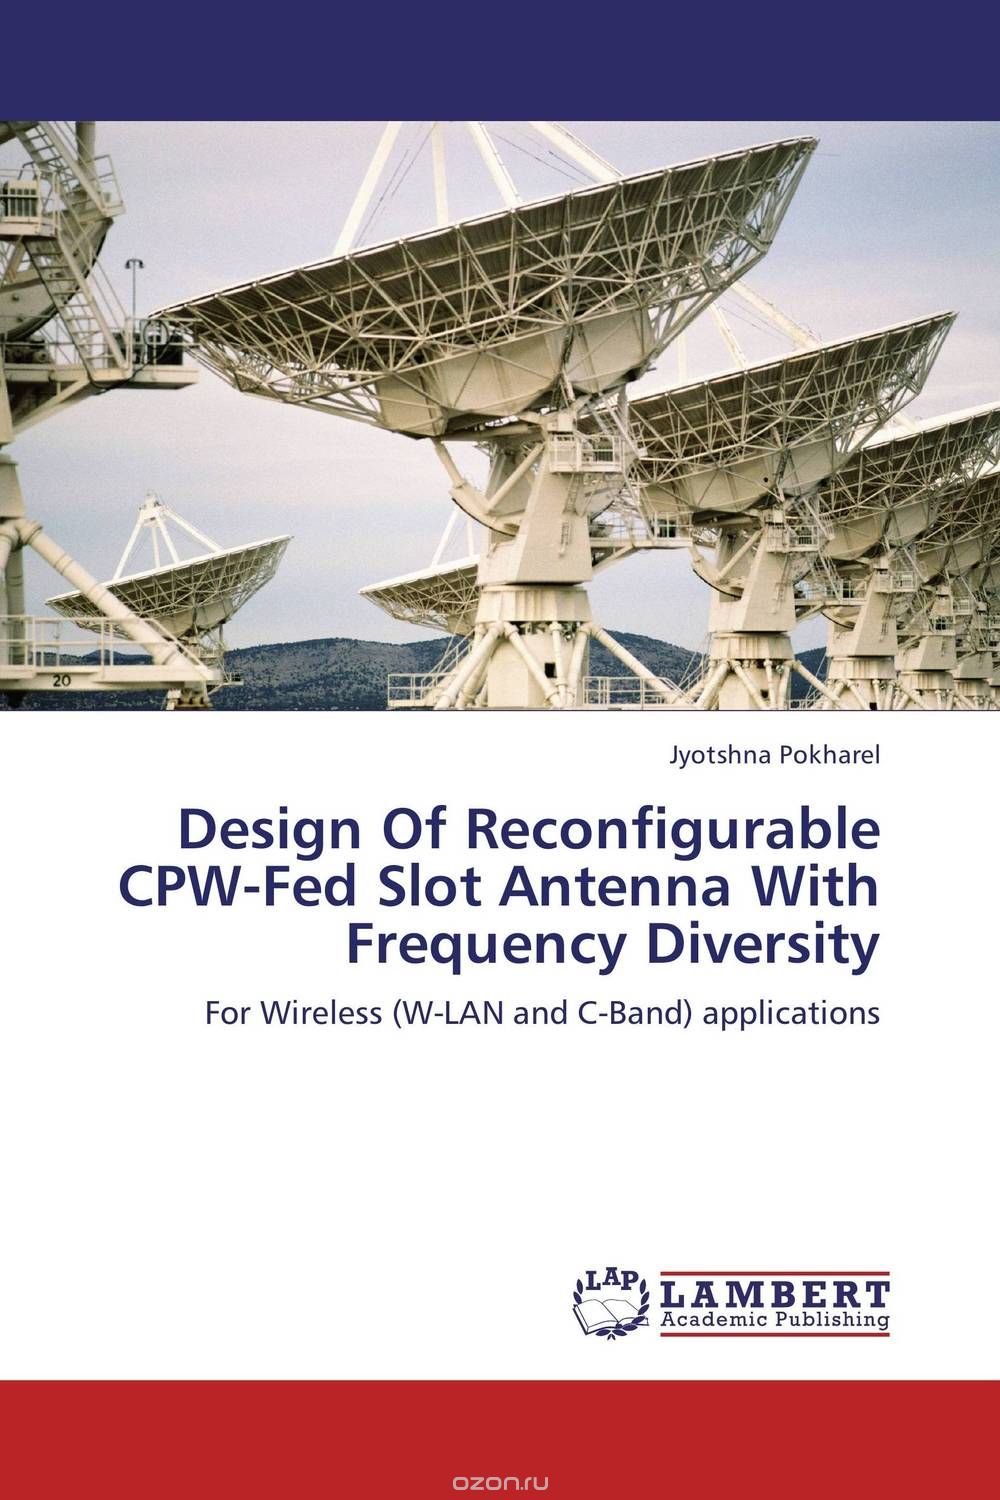 Скачать книгу "Design Of Reconfigurable CPW-Fed Slot Antenna With Frequency Diversity"